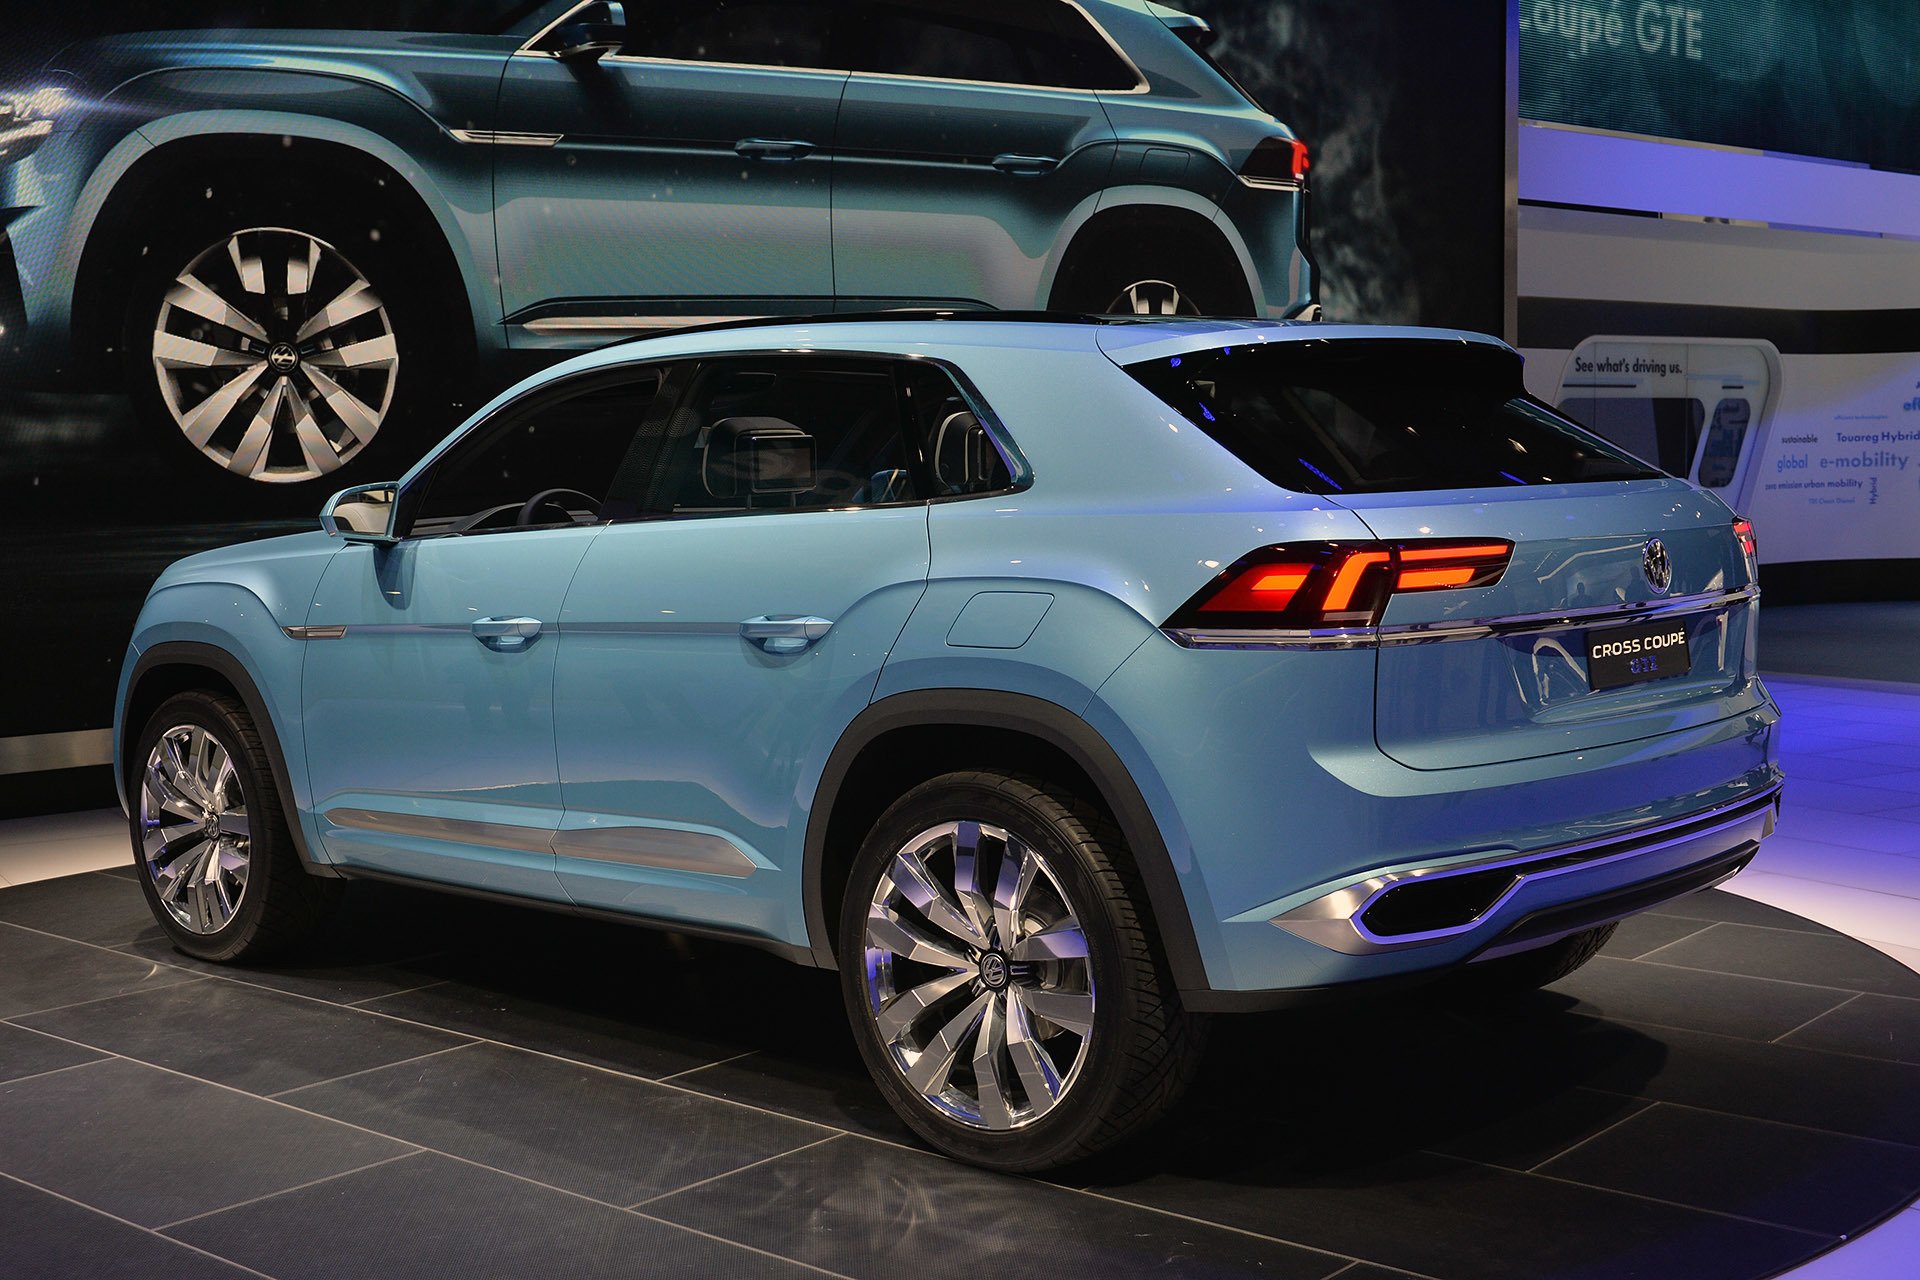 2015, Cars, Concept, Coupe, Cross, Gte, Volkswagen Wallpaper